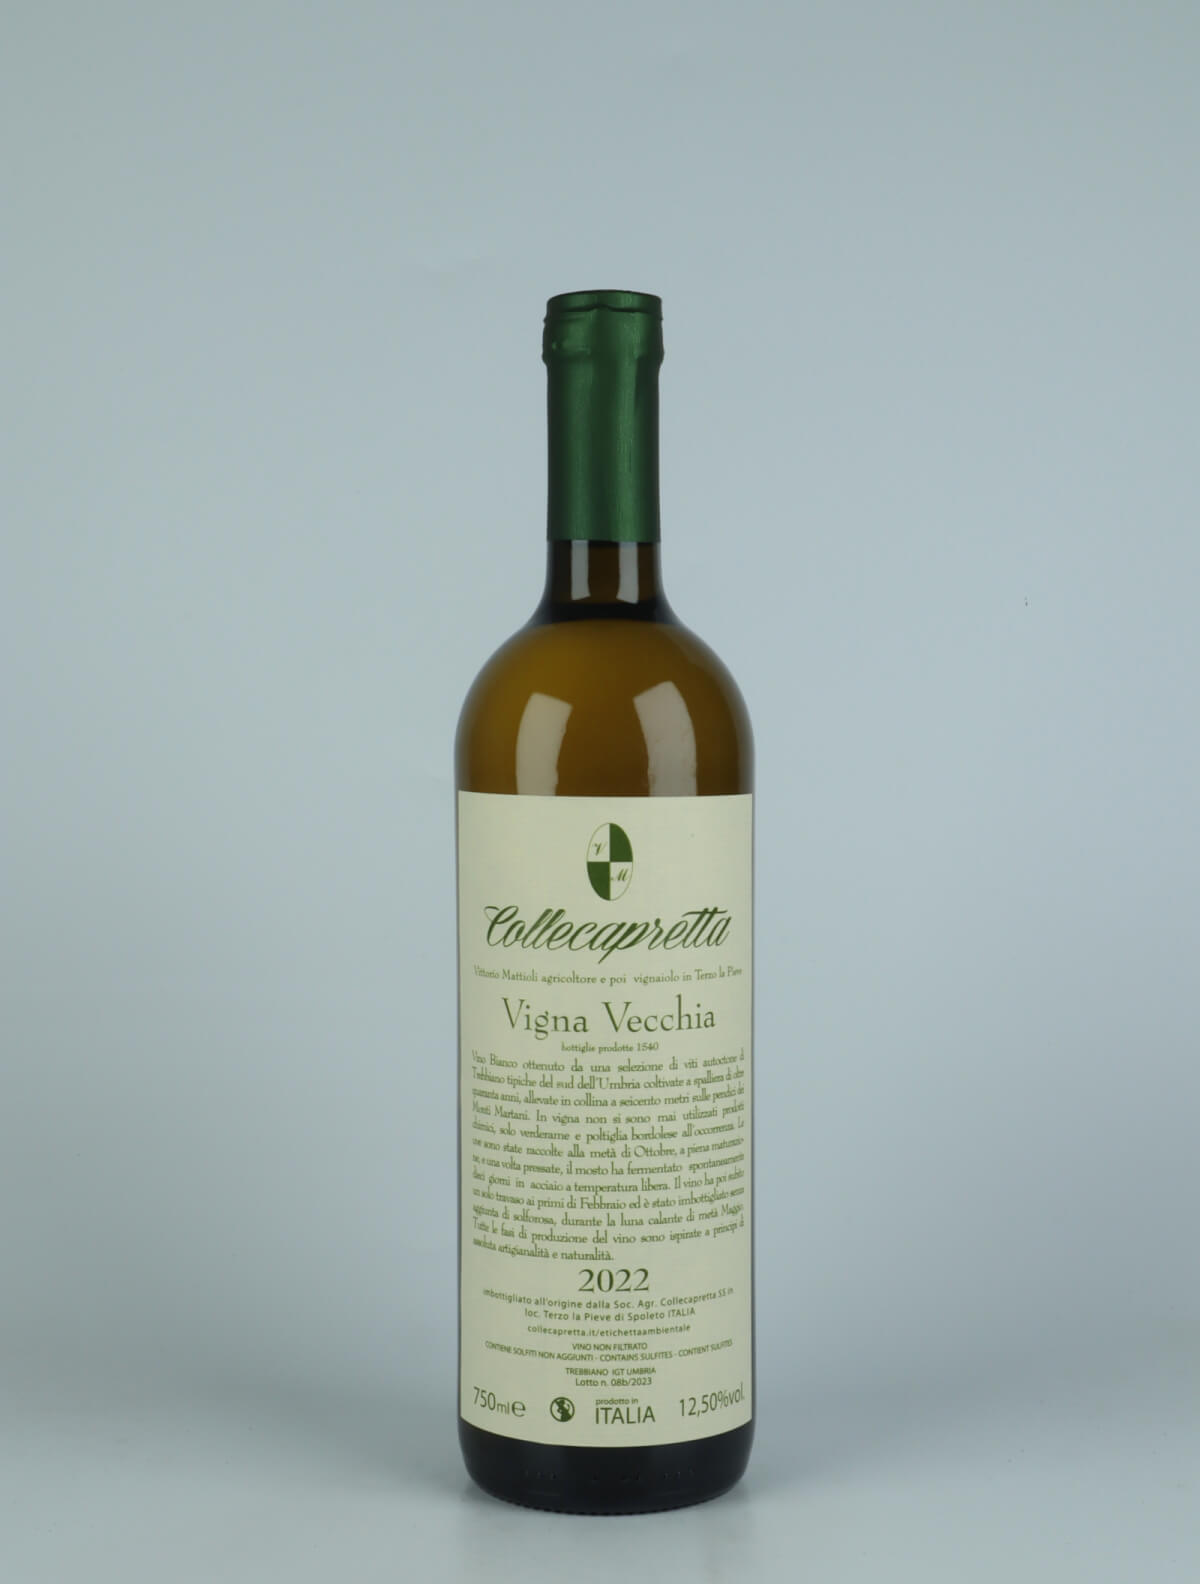 En flaske 2022 Vigna Vecchia Orange vin fra Collecapretta, Umbrien i Italien